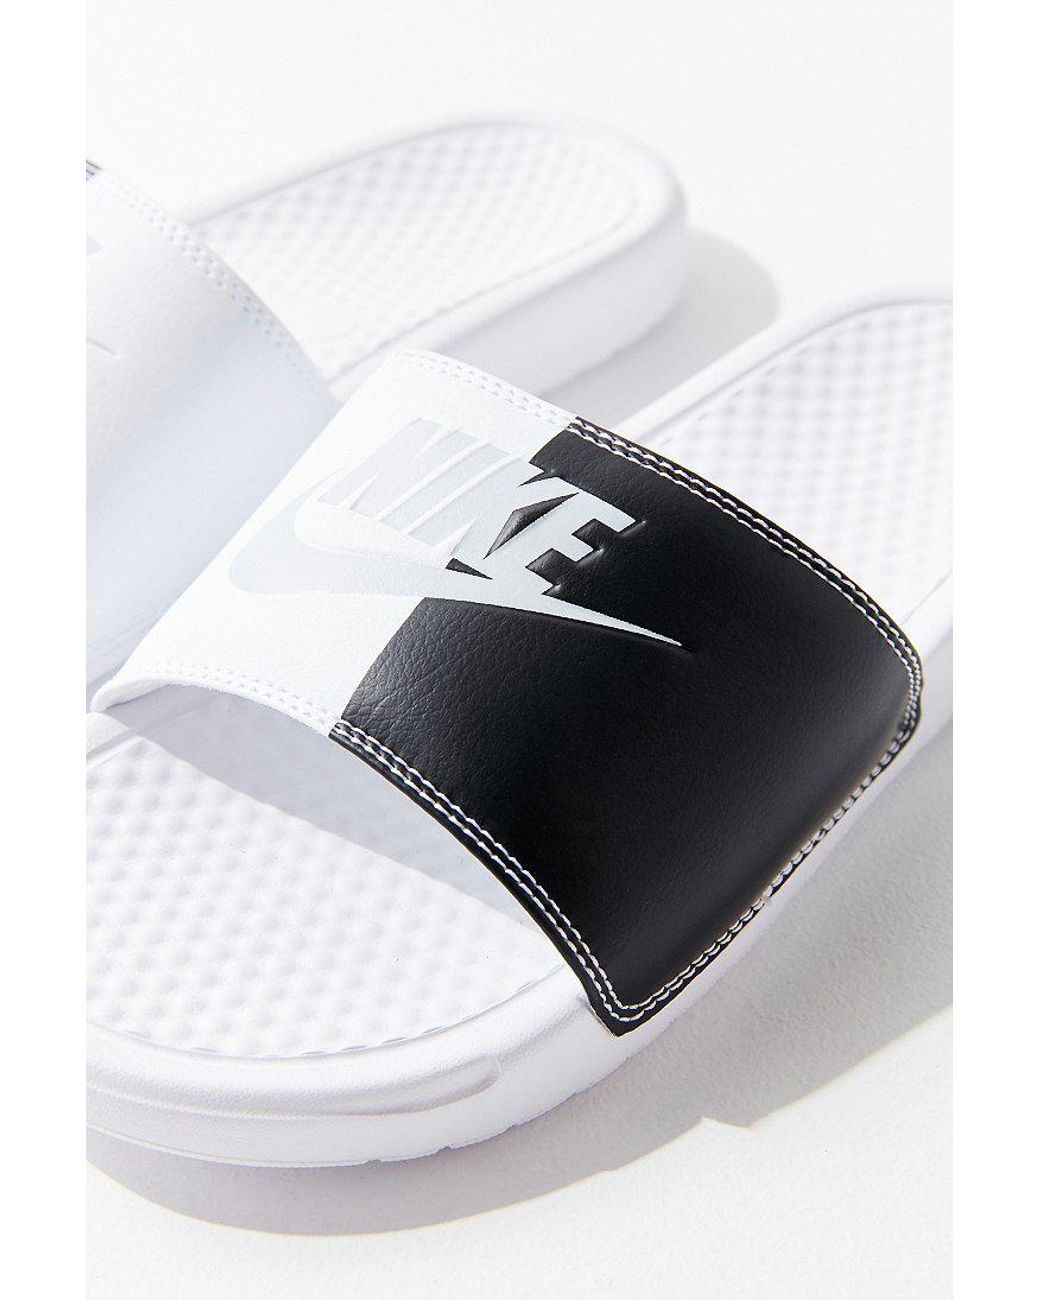 Nike Rubber Nike Benassi Jdi Colorblock Slide in Black + White (White) |  Lyst